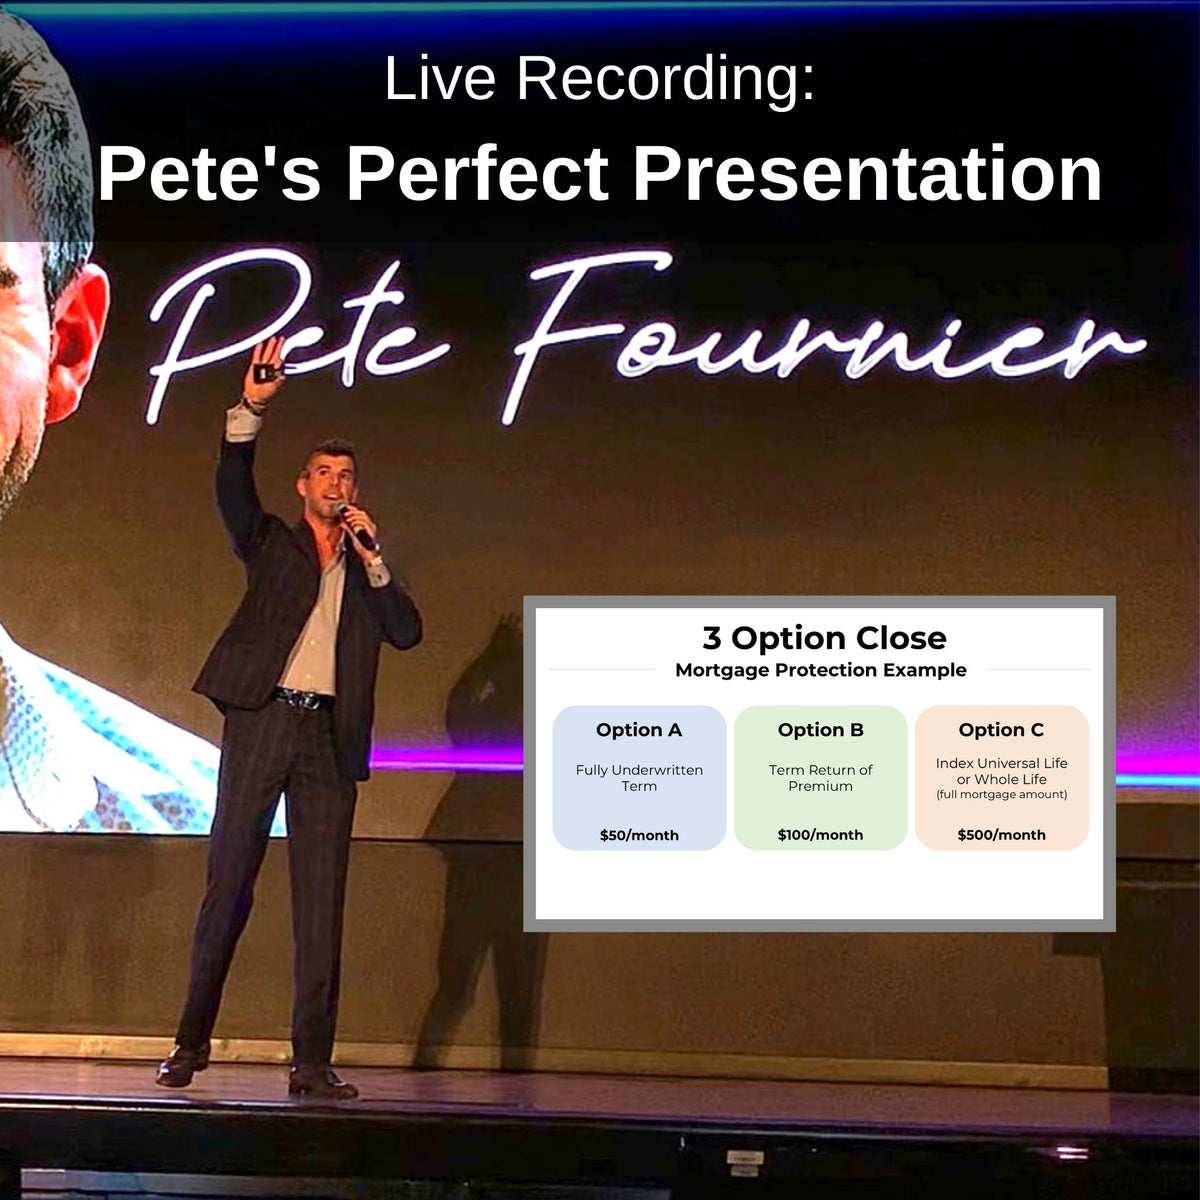 Live Recording: Pete's Perfect Presentation